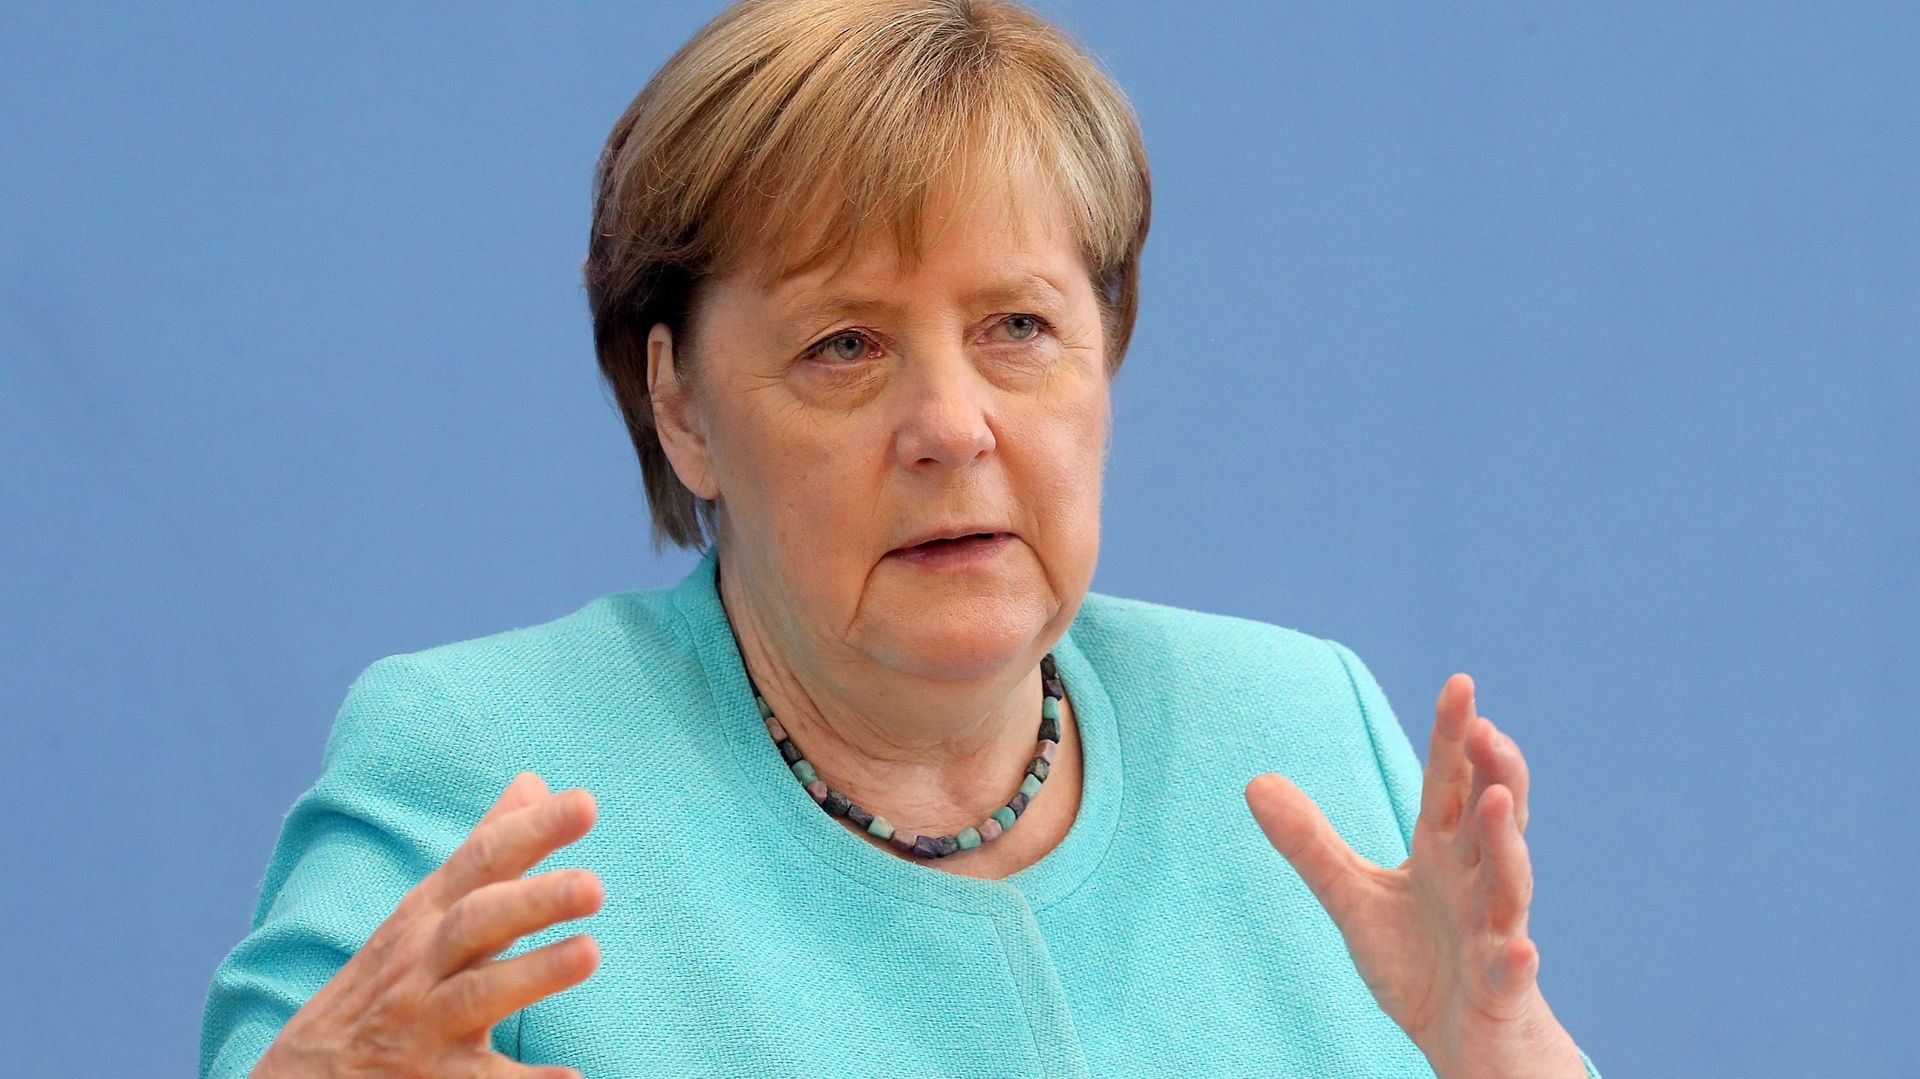 Angela Merkel appelle la population à intensifier ses efforts de vaccination